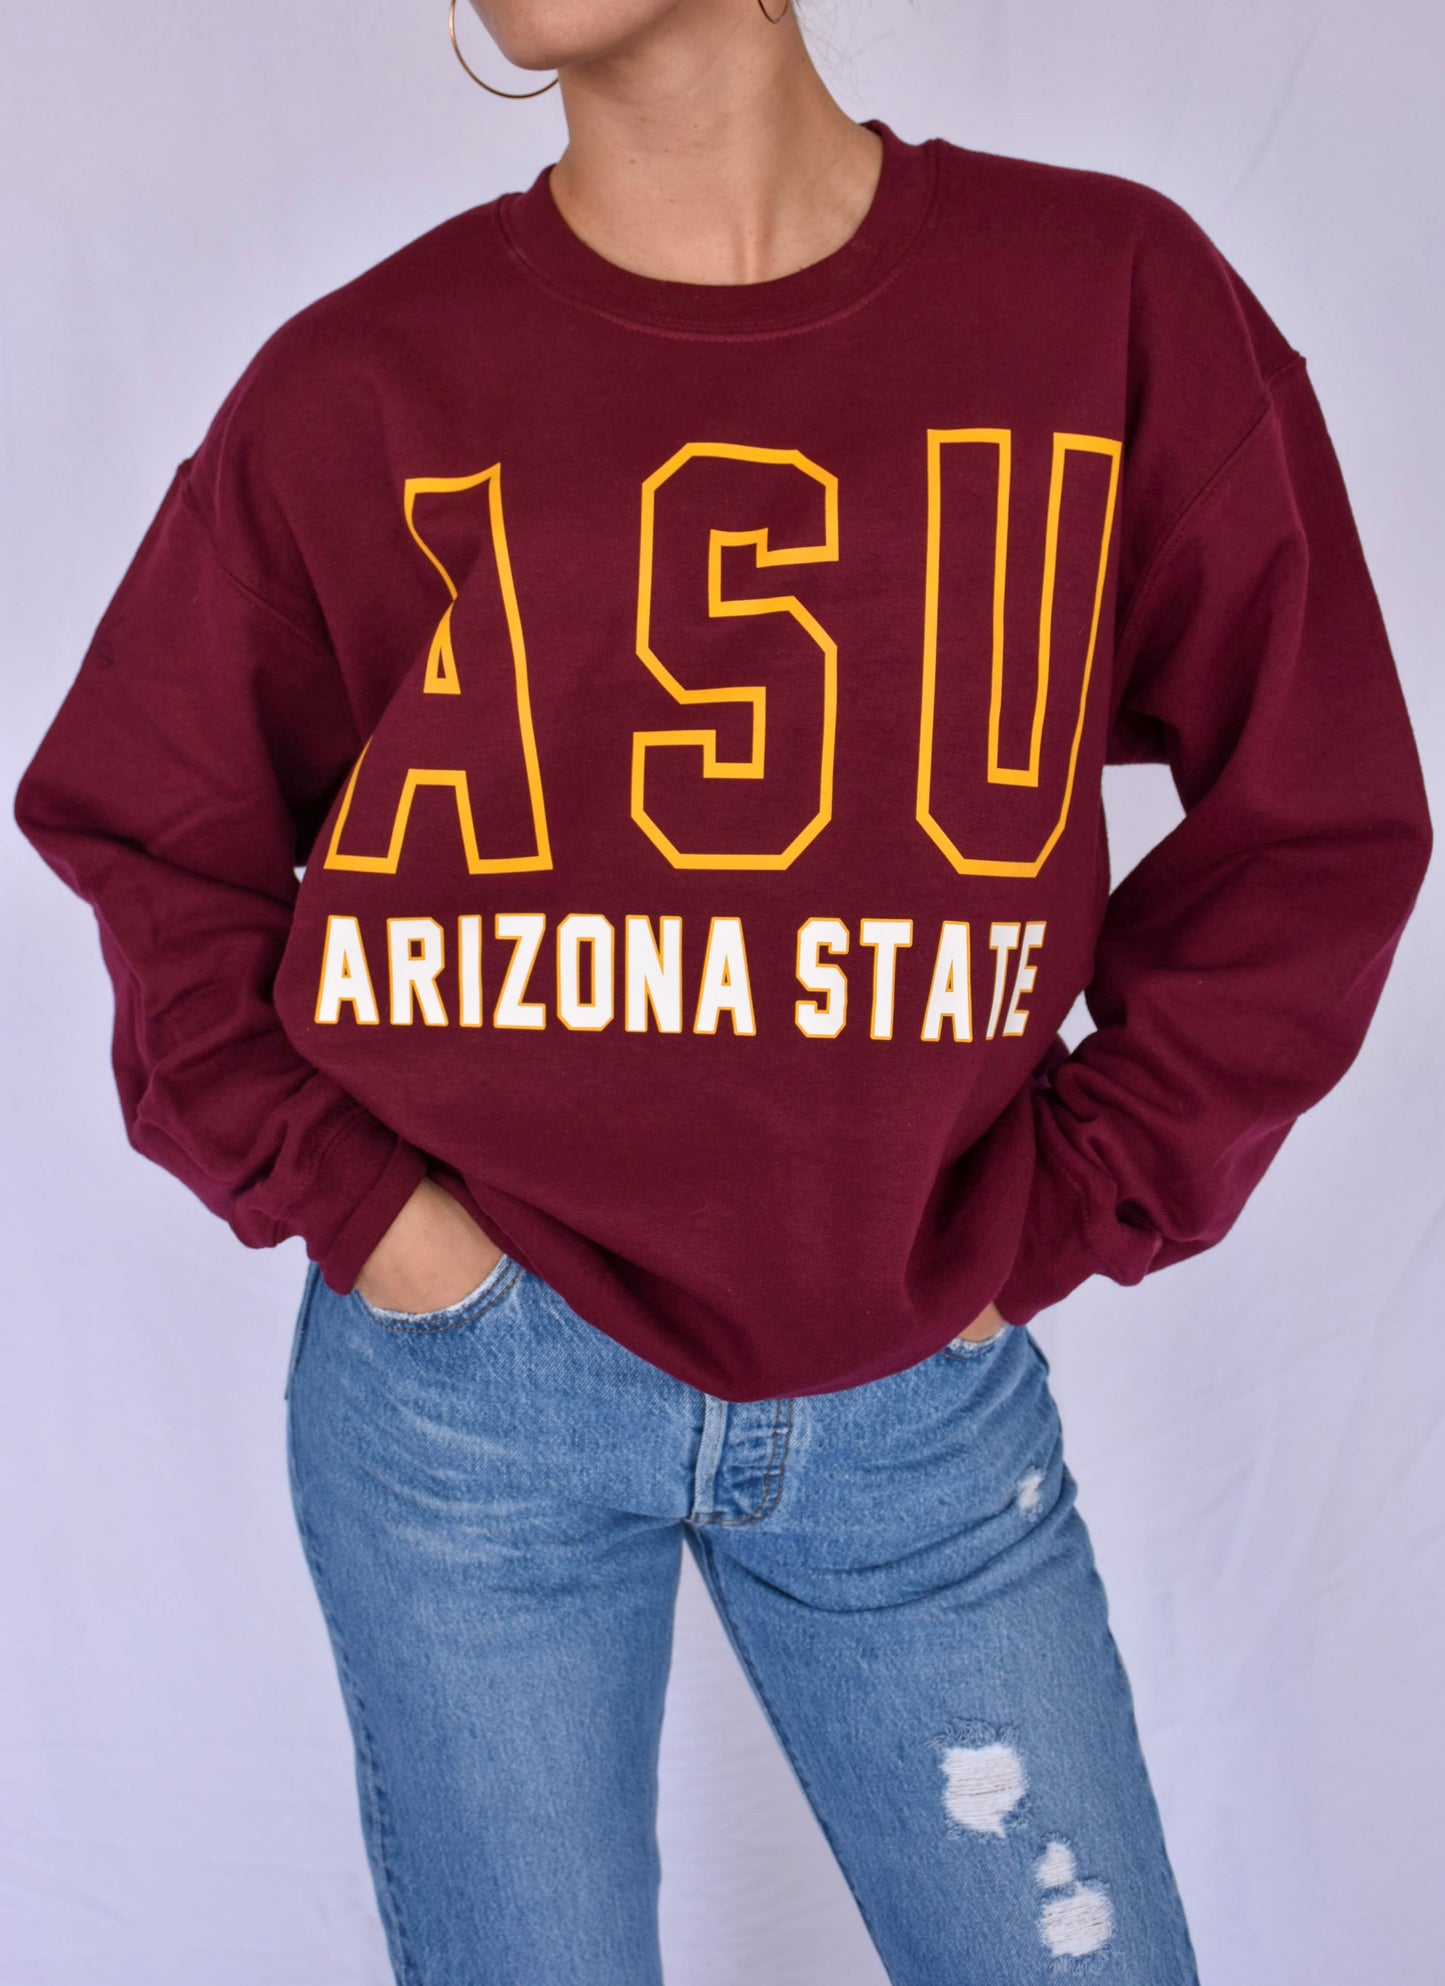 Short Pass Sweatshirt - ASU